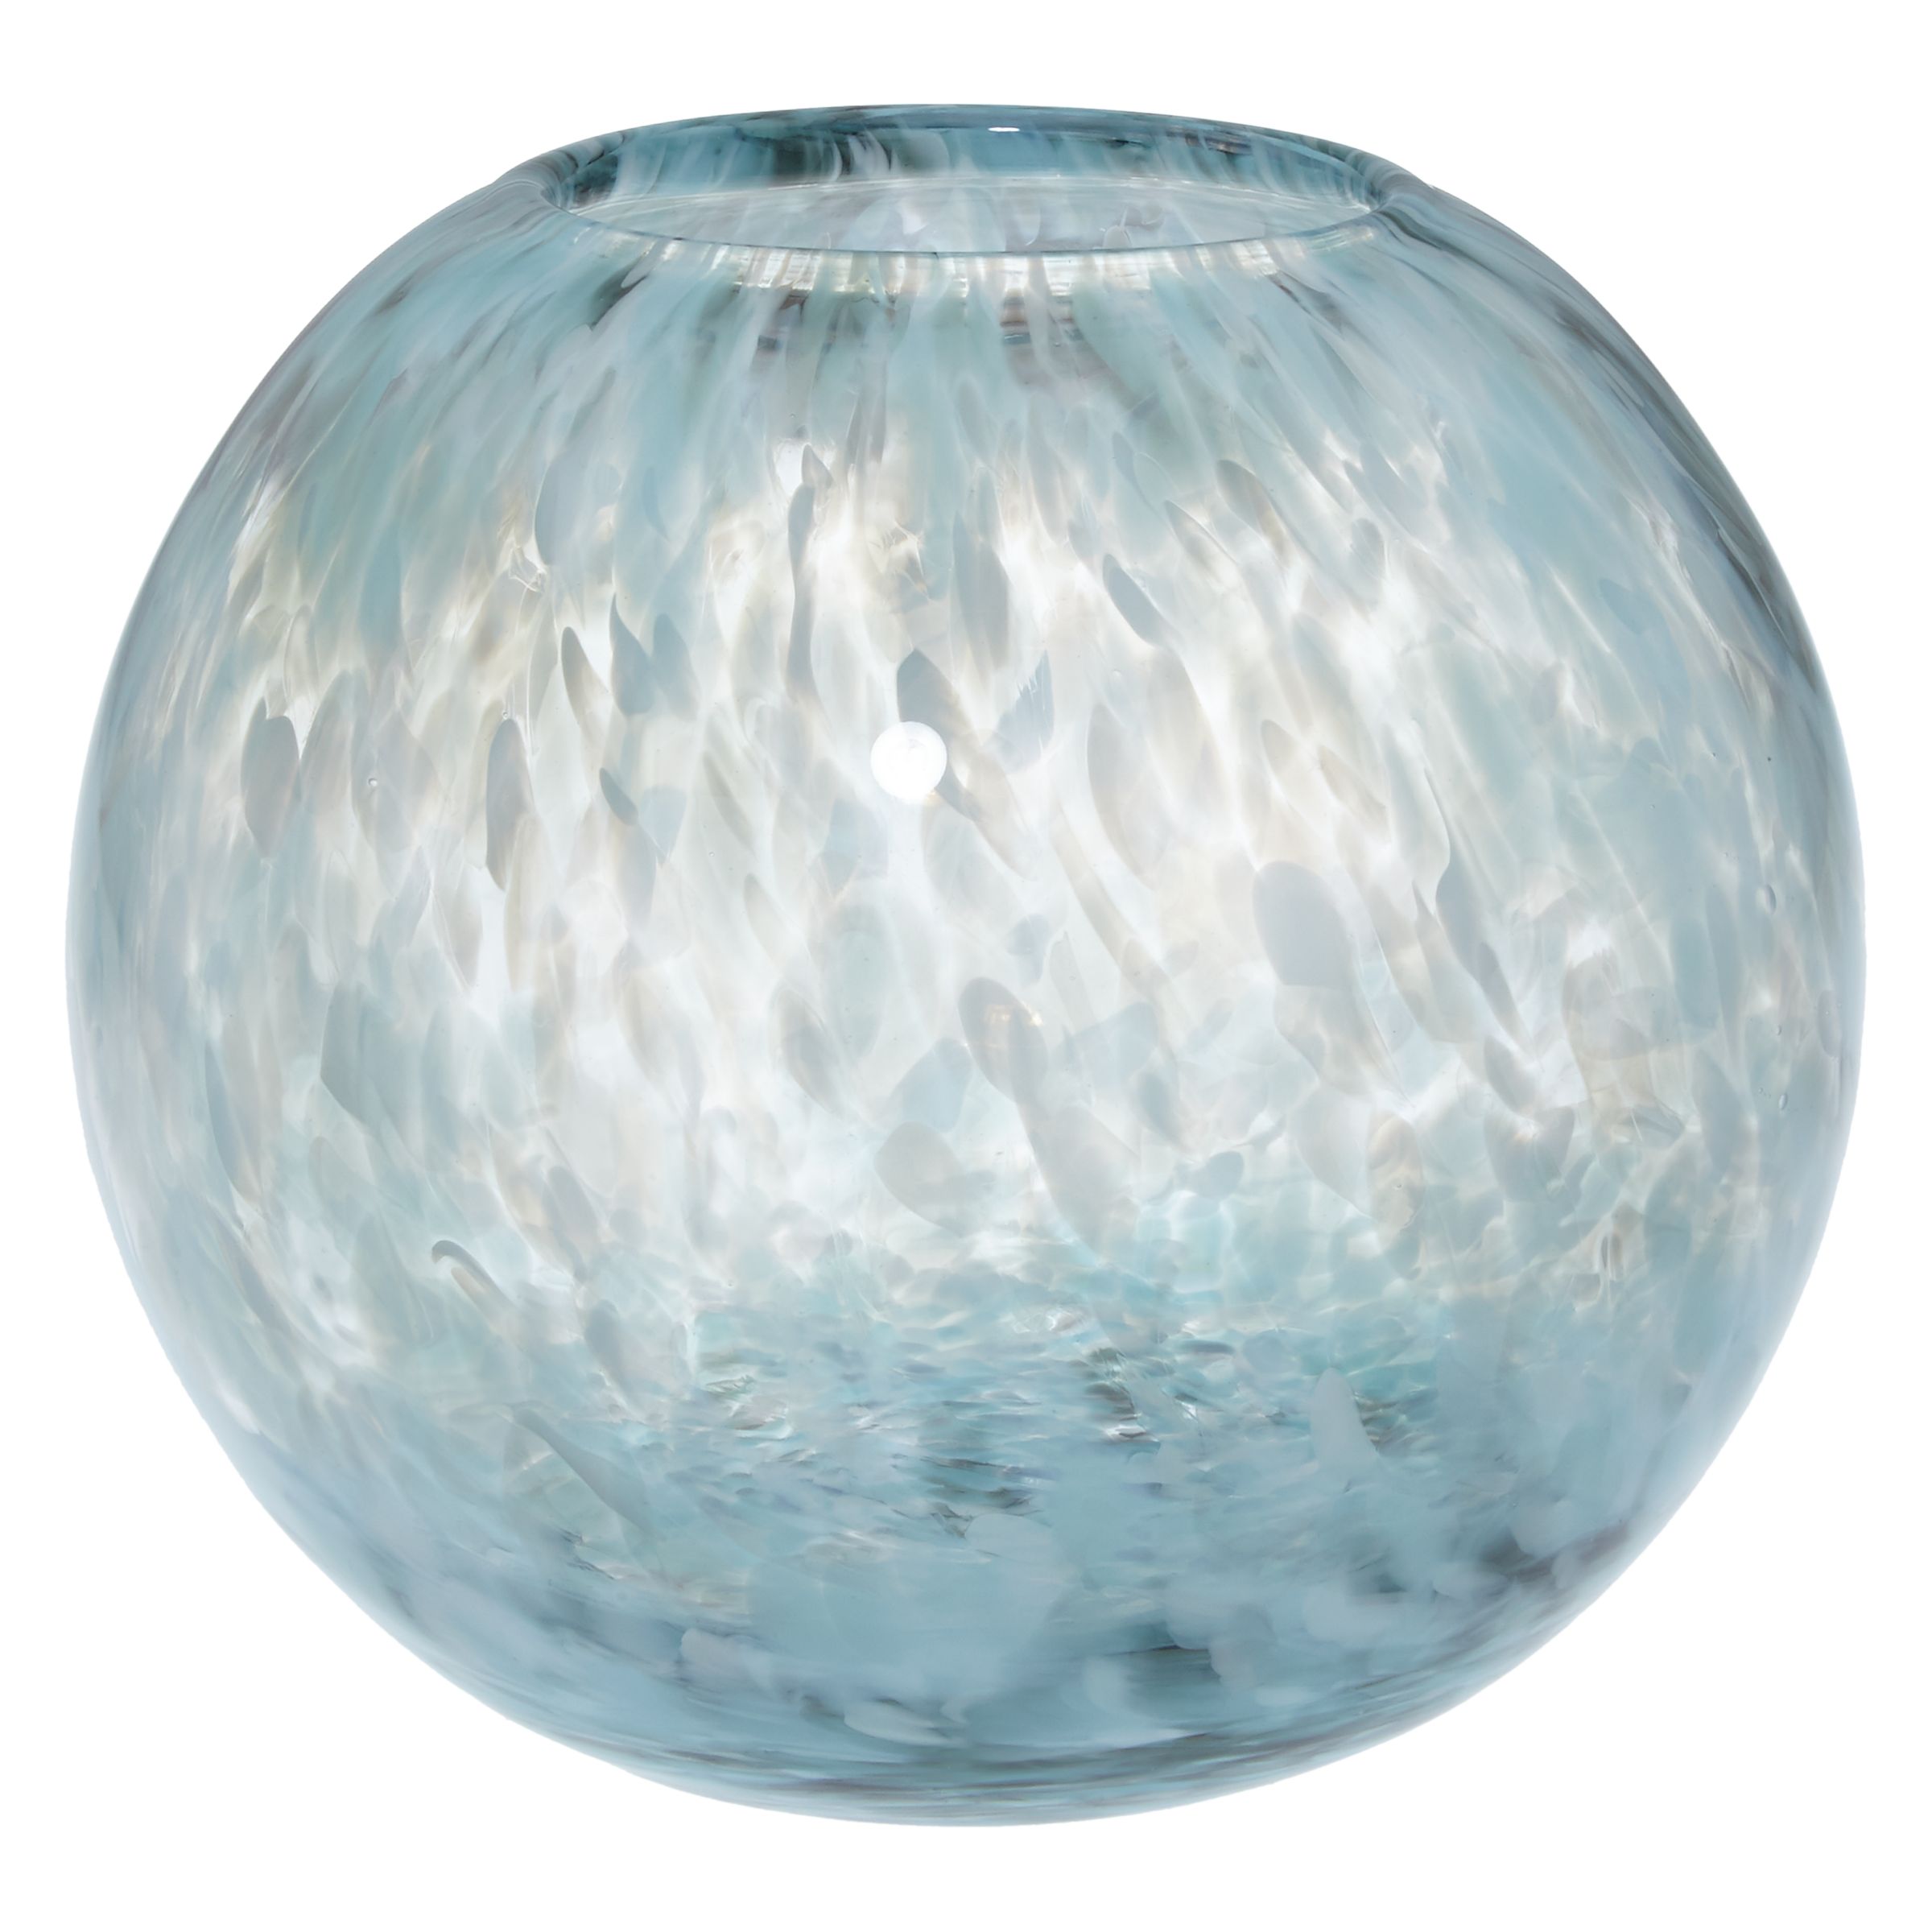 John Lewis & Partners Speckle Vase